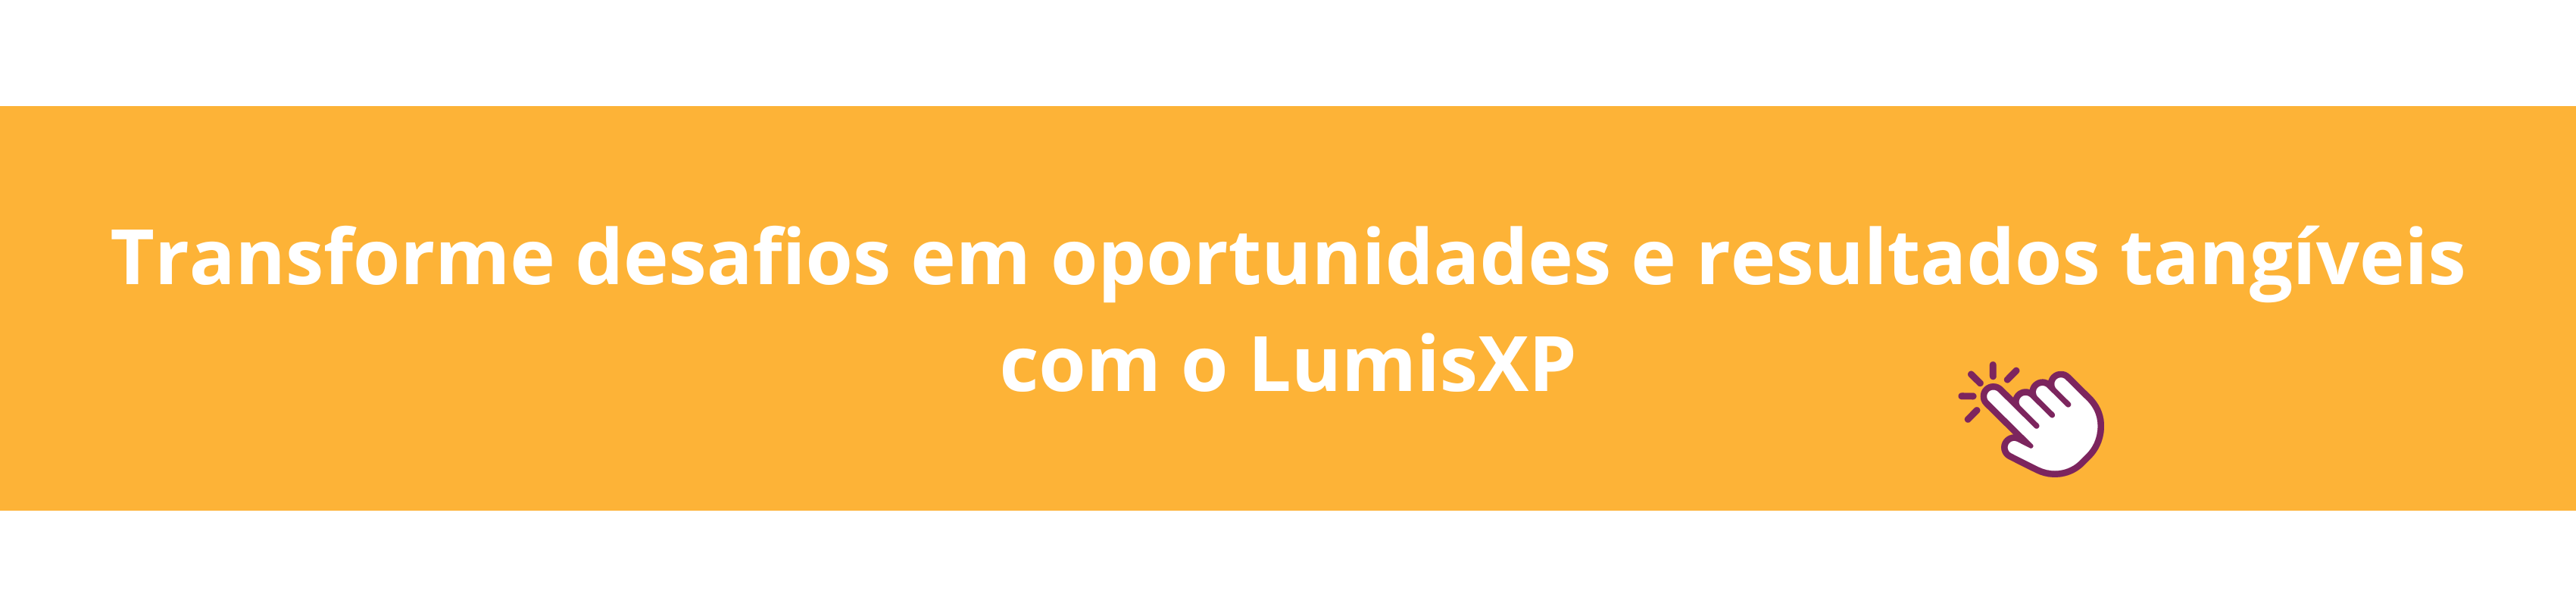 faixa-blog-dxp plataform experience-lumisxp.png